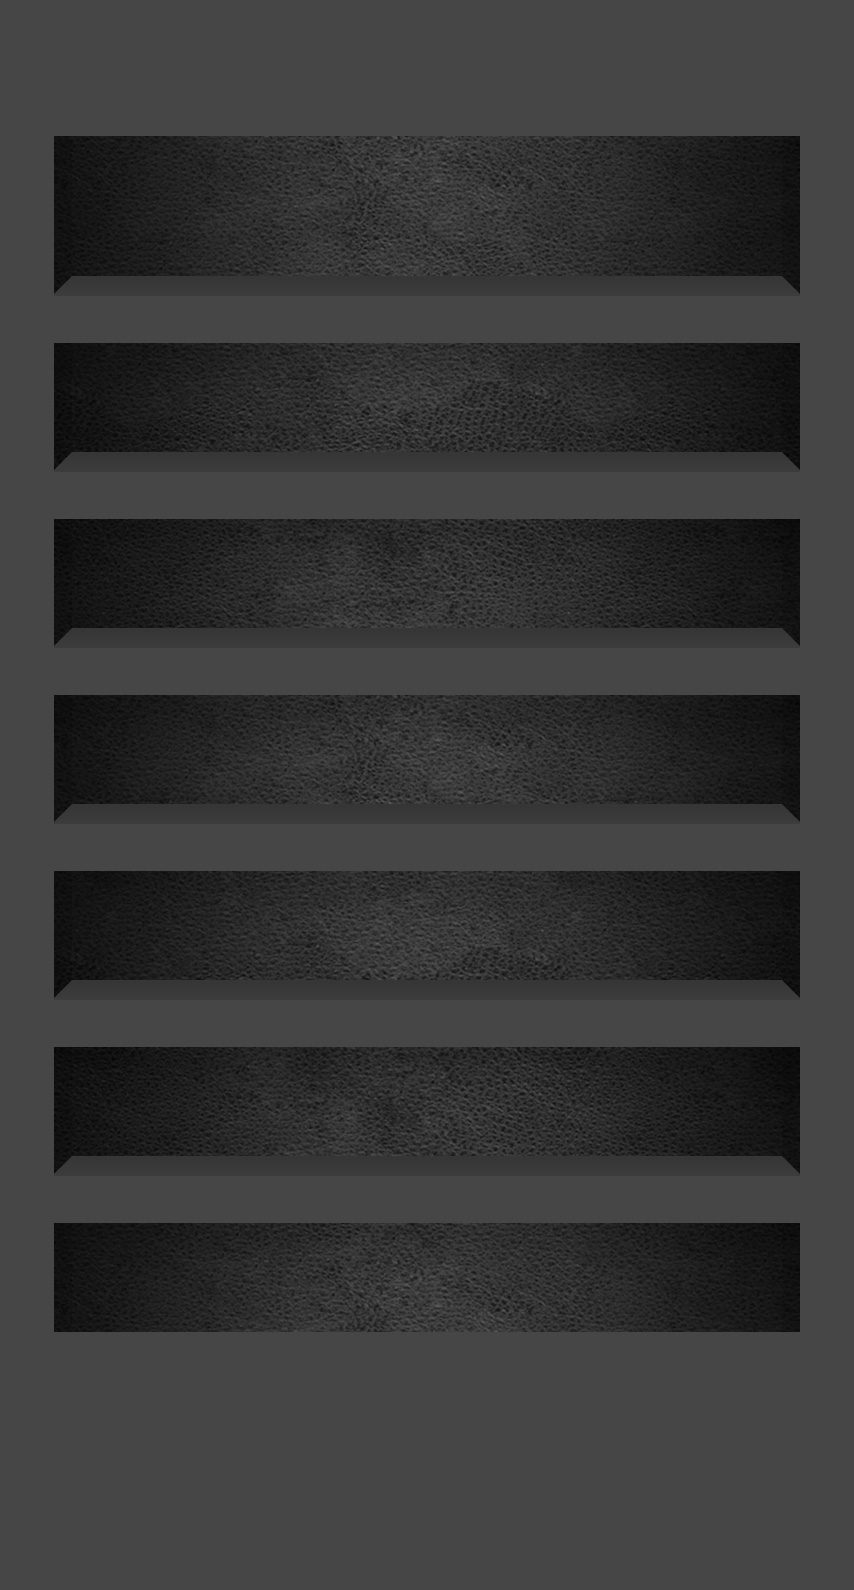 Shelf wood simple black | wallpaper.sc iPhone8